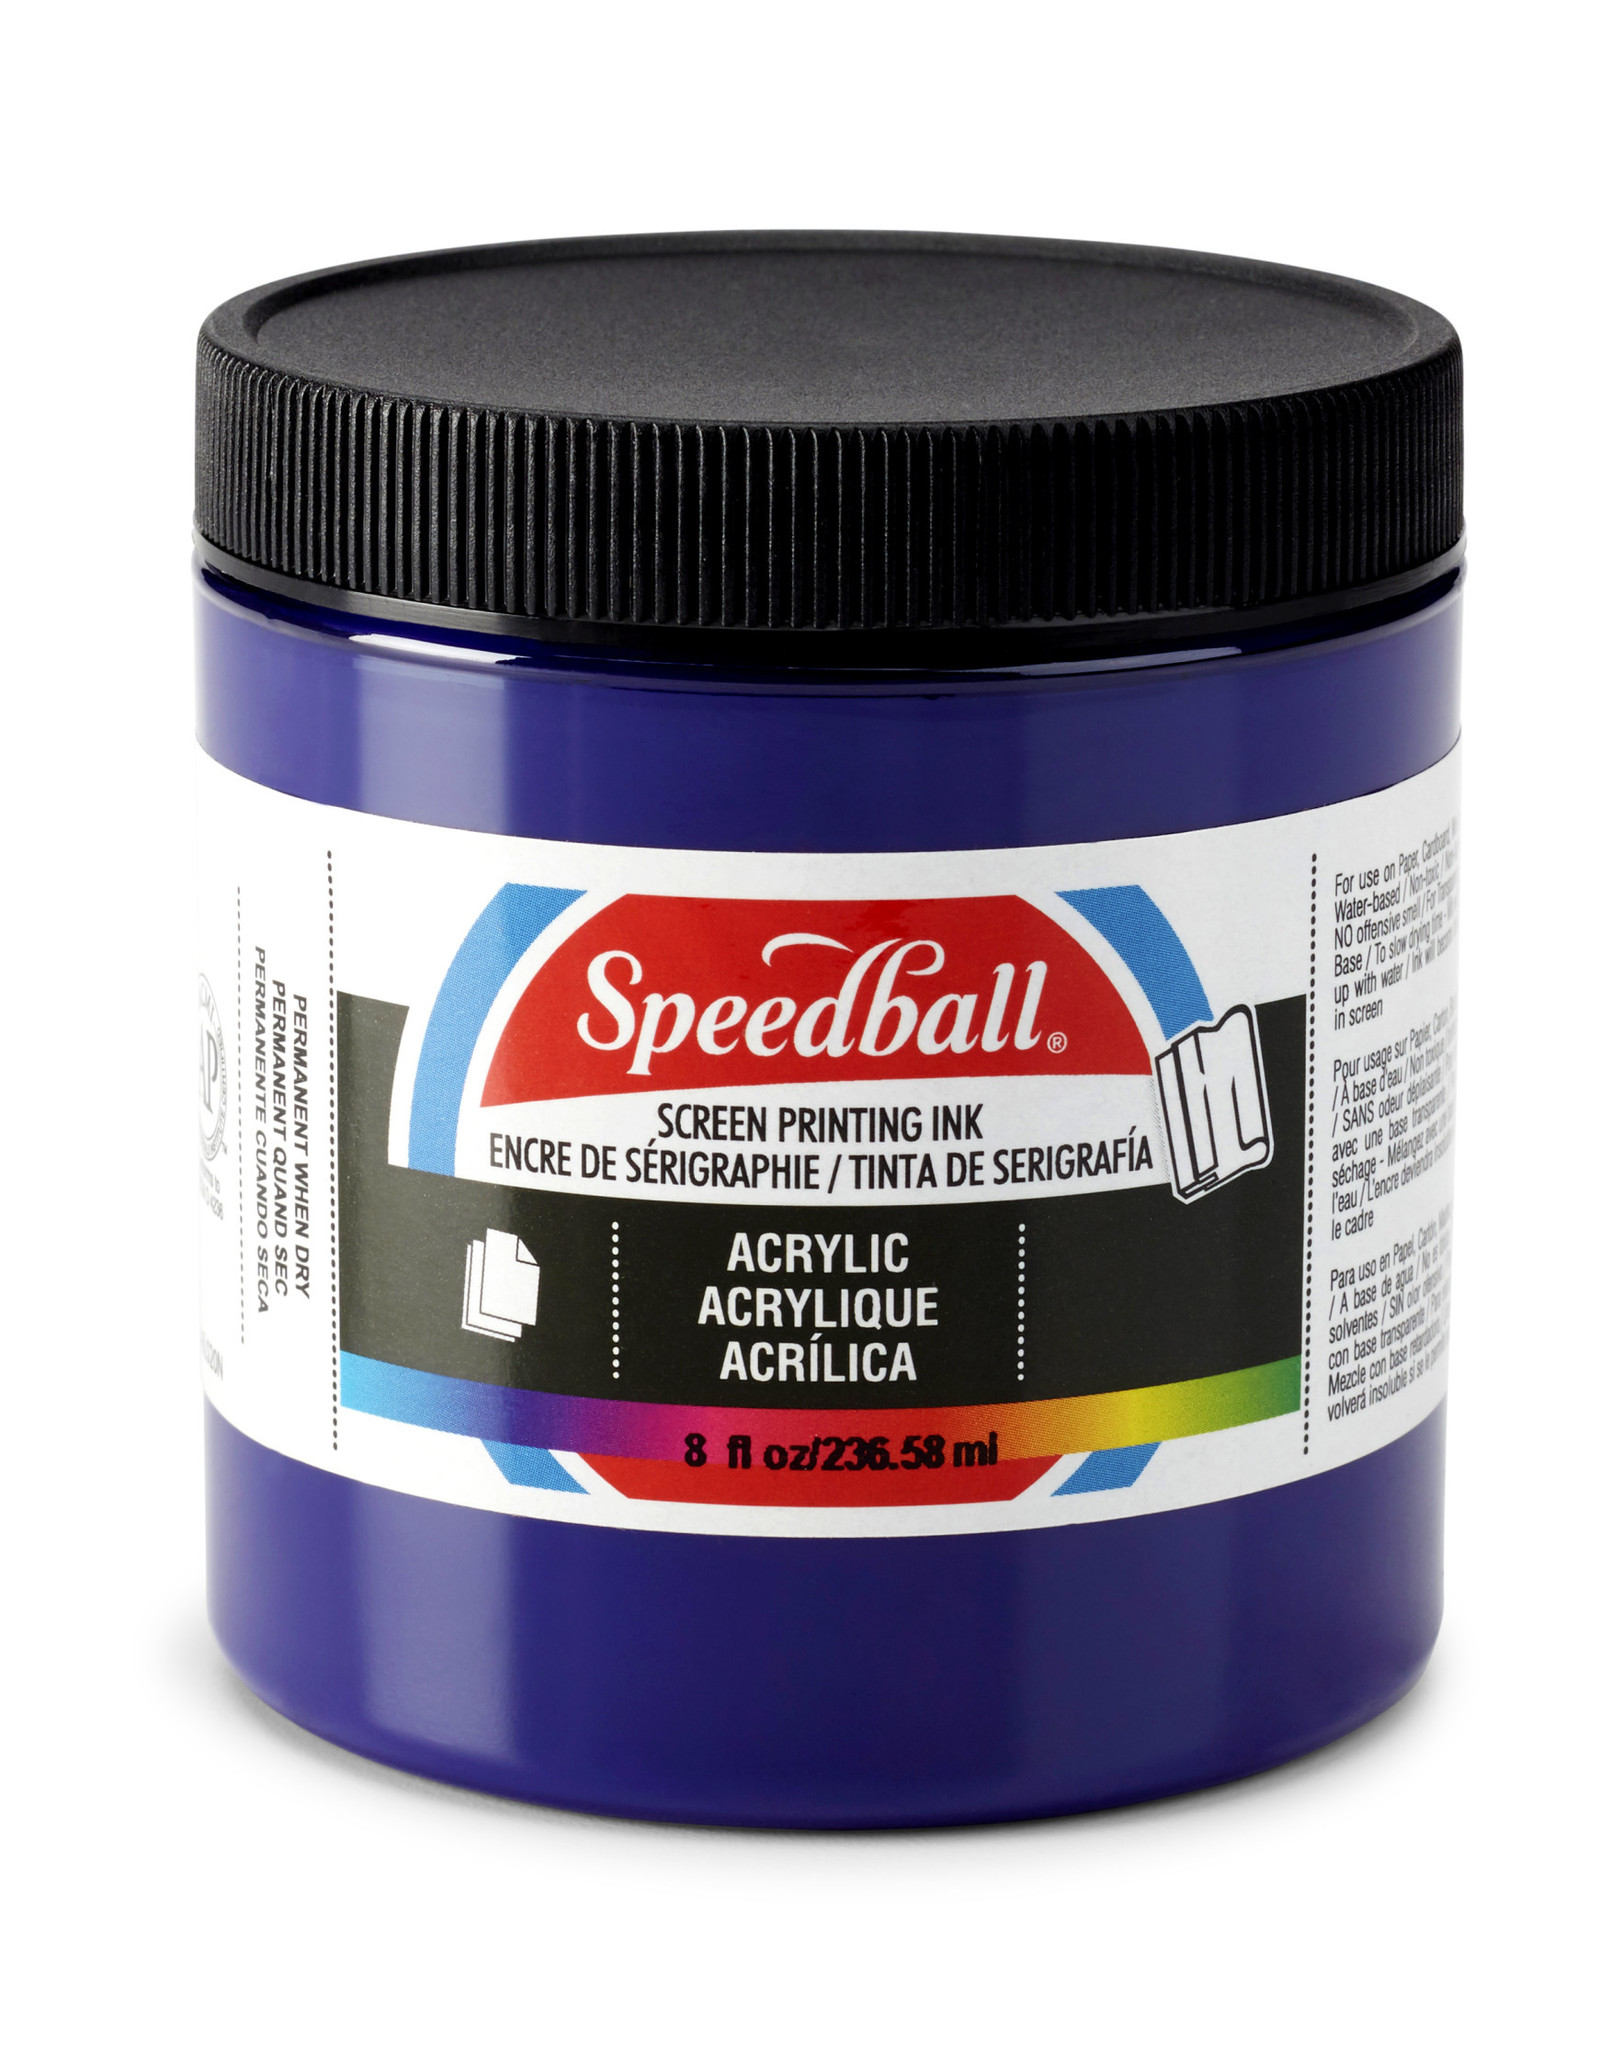 SPEEDBALL ART PRODUCTS Speedball Acrylic Screen Printing Ink, Violet, 8oz